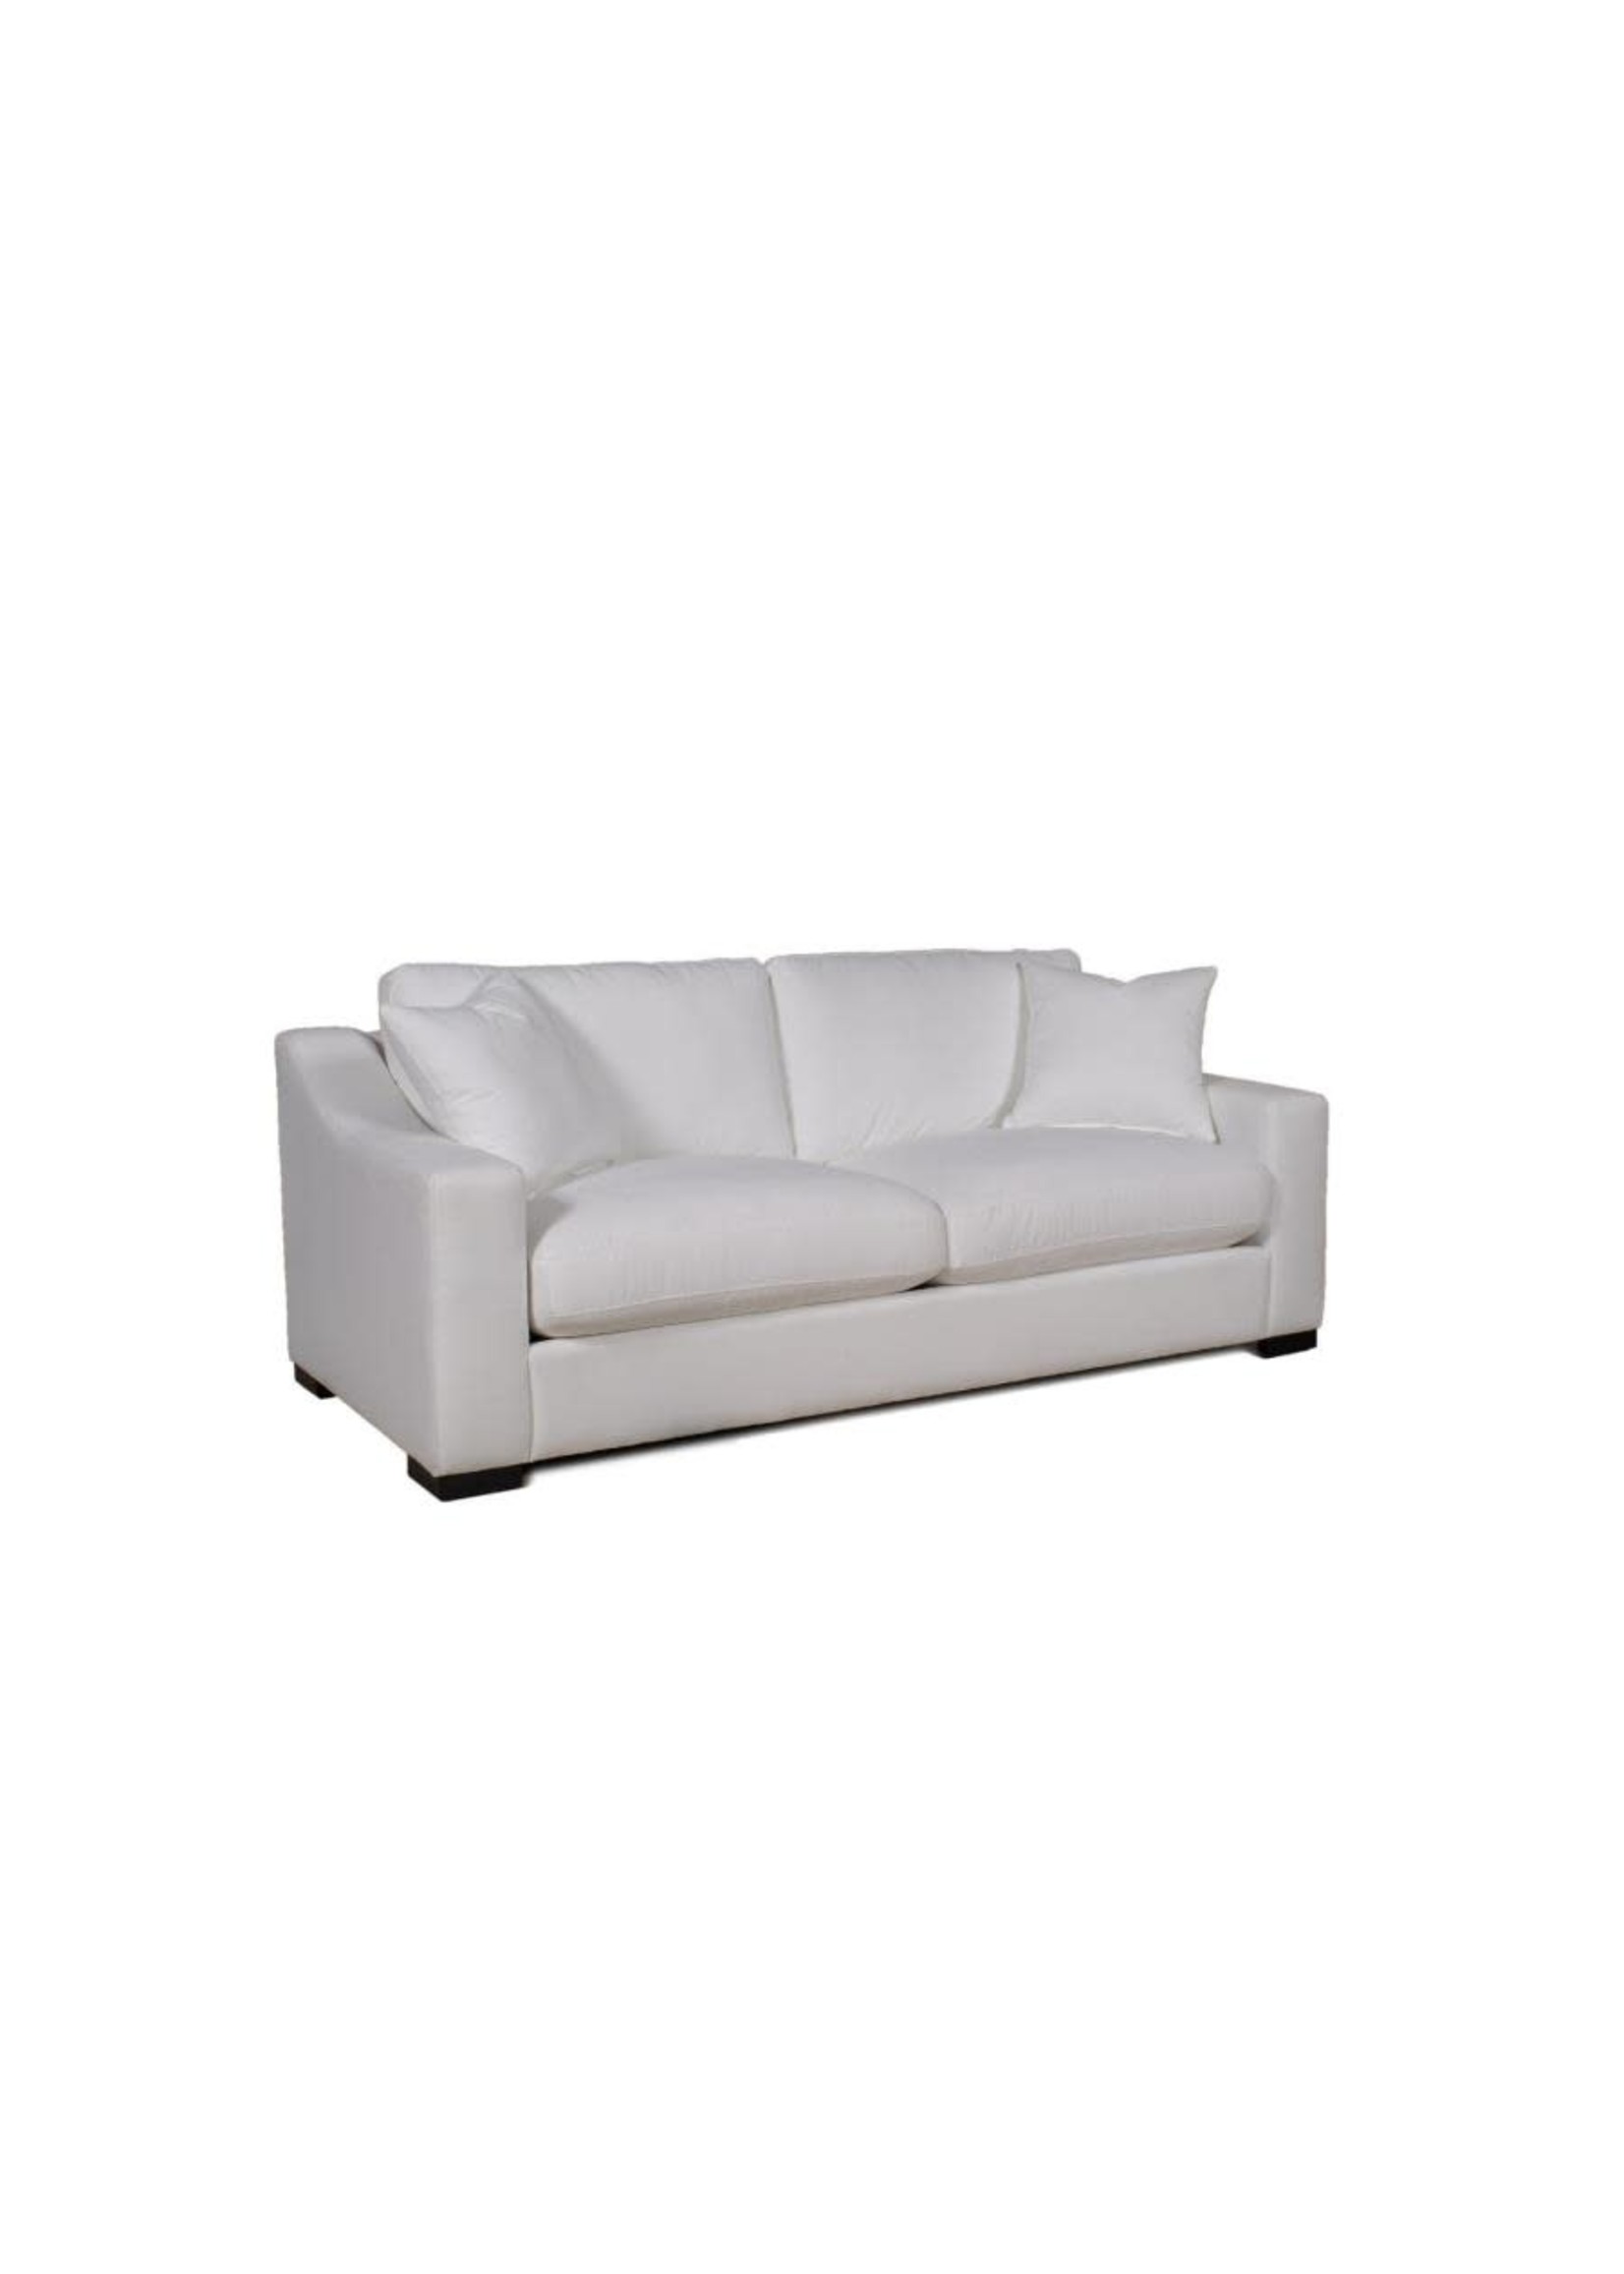 Coaster Furniture 509891 Sofa White